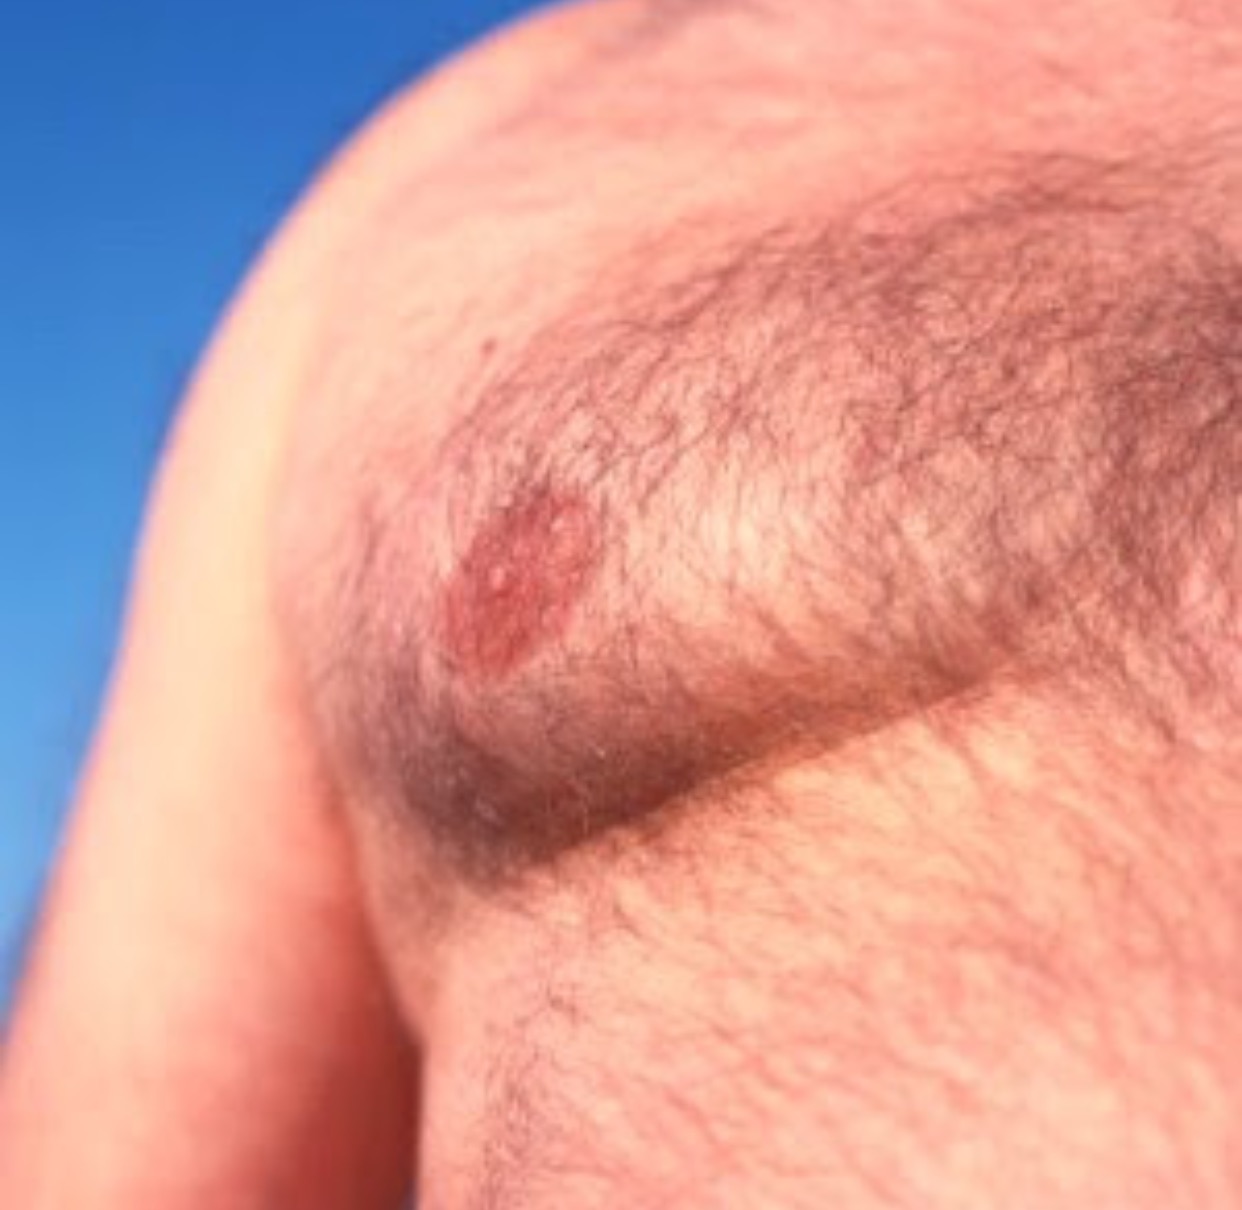 уплотнение под кожей в груди у мужчин фото 91